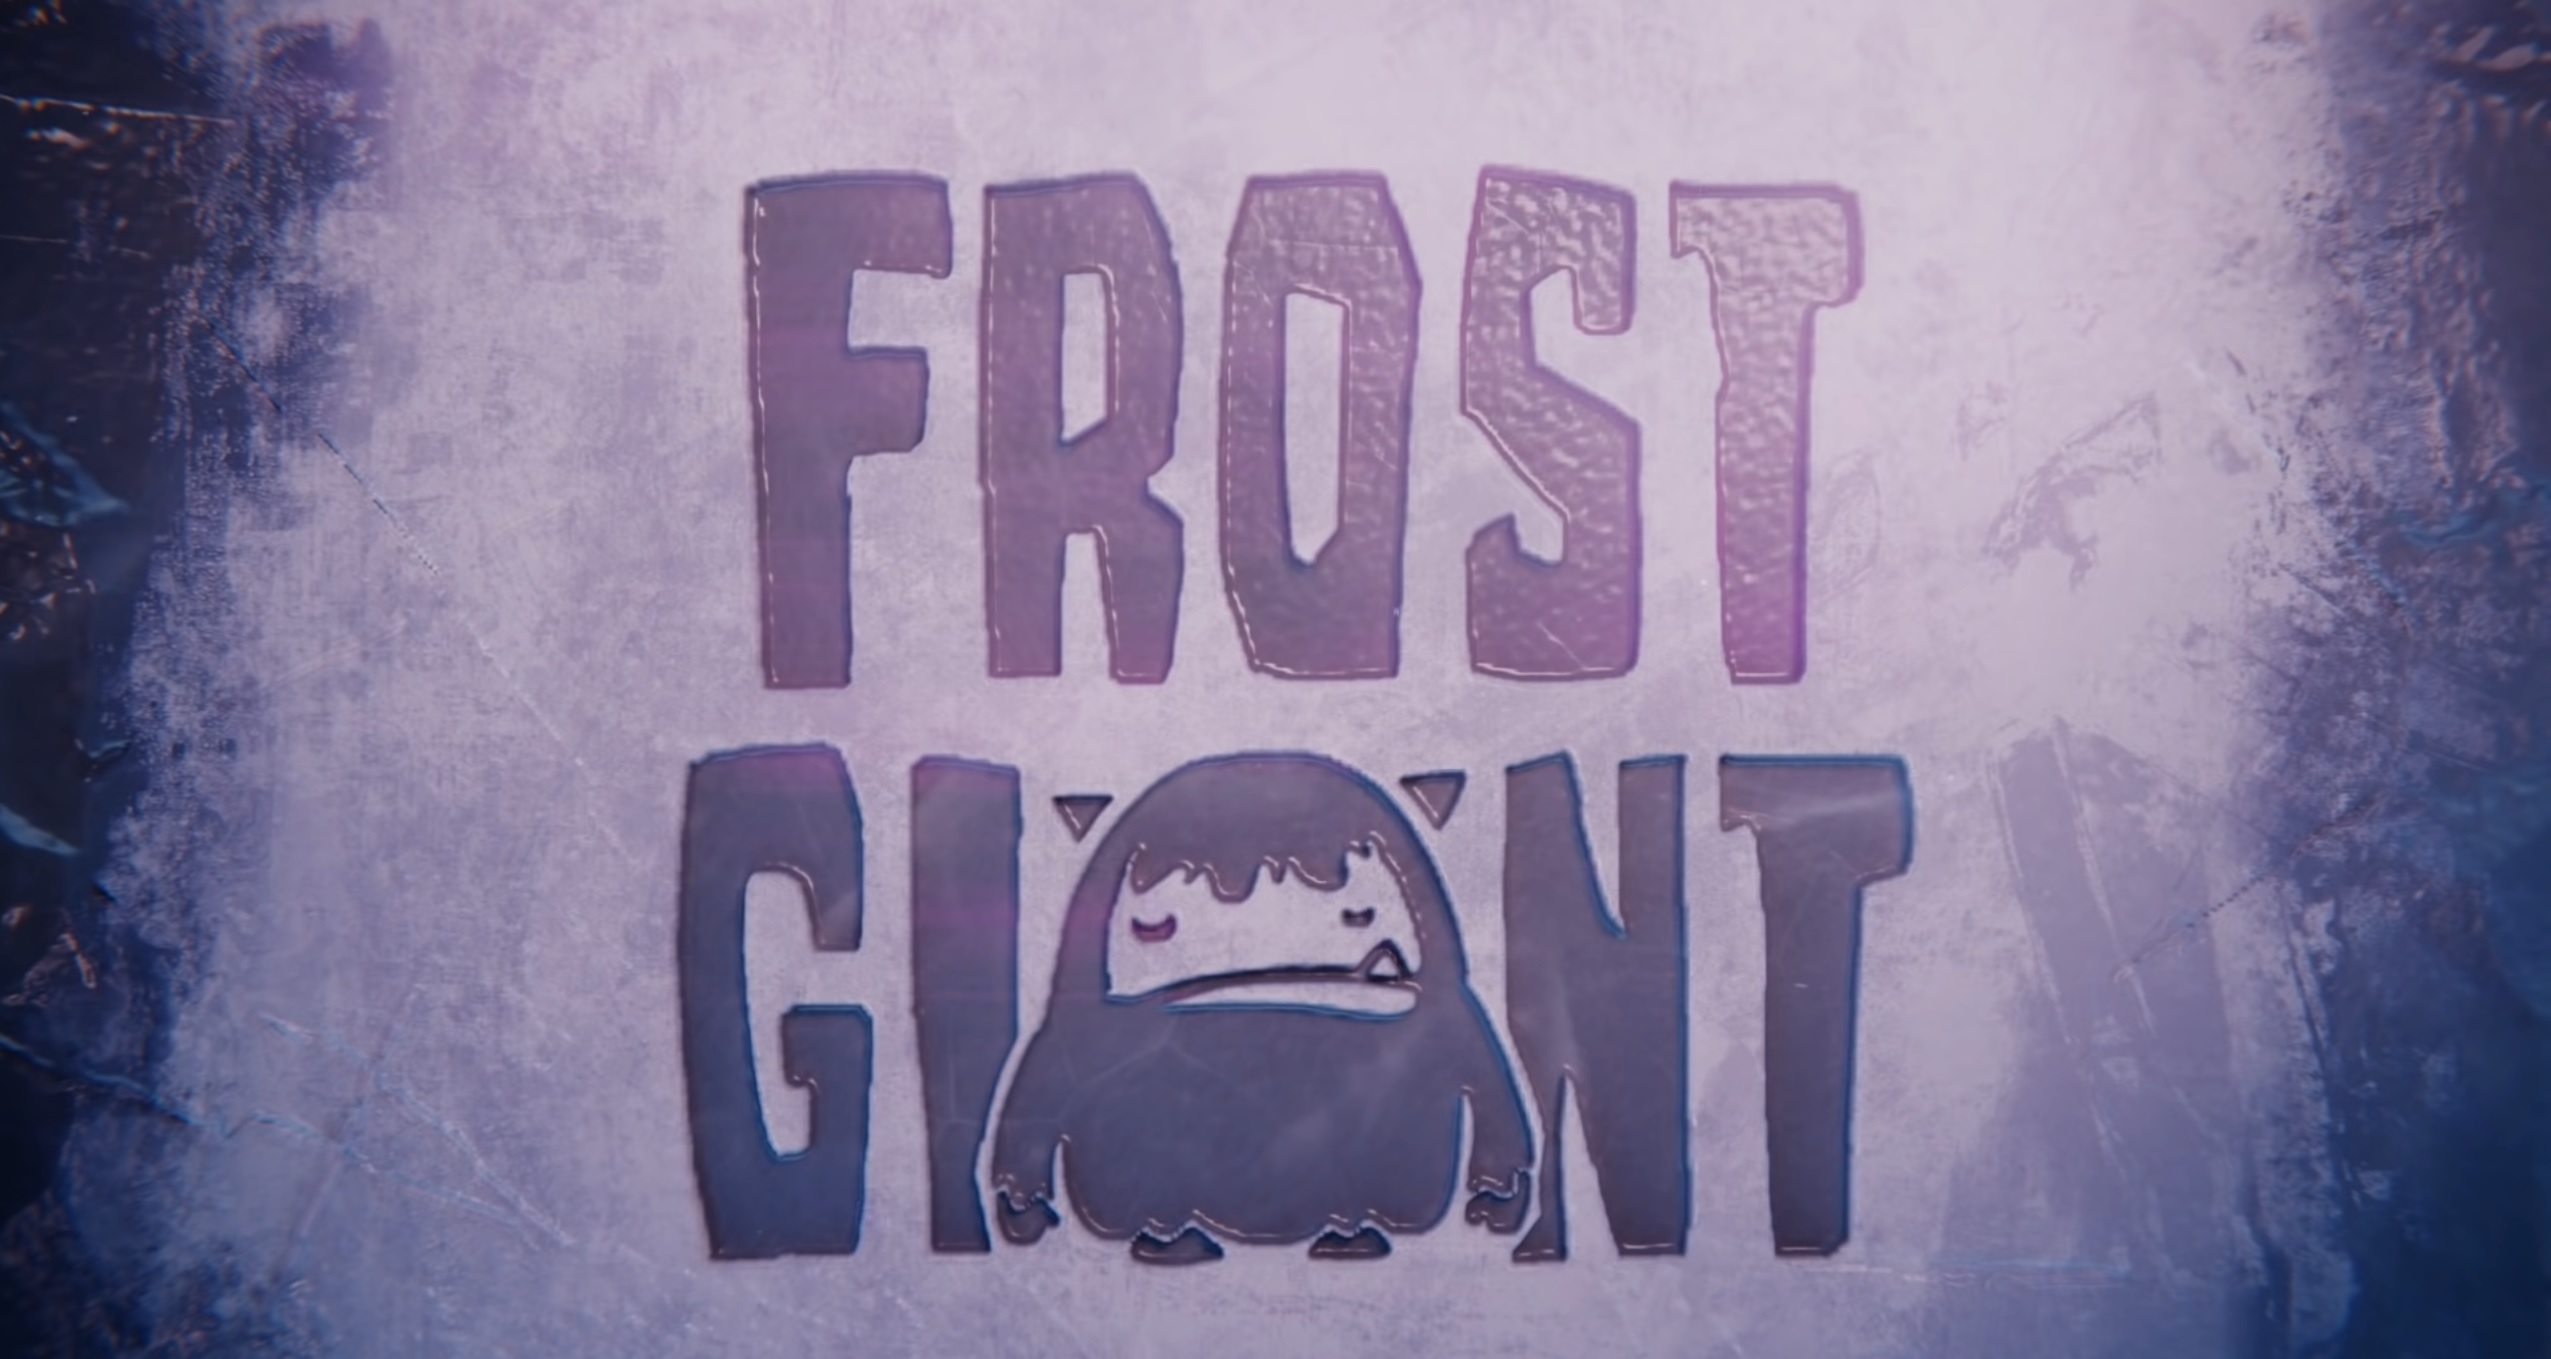 frost giant studios 1